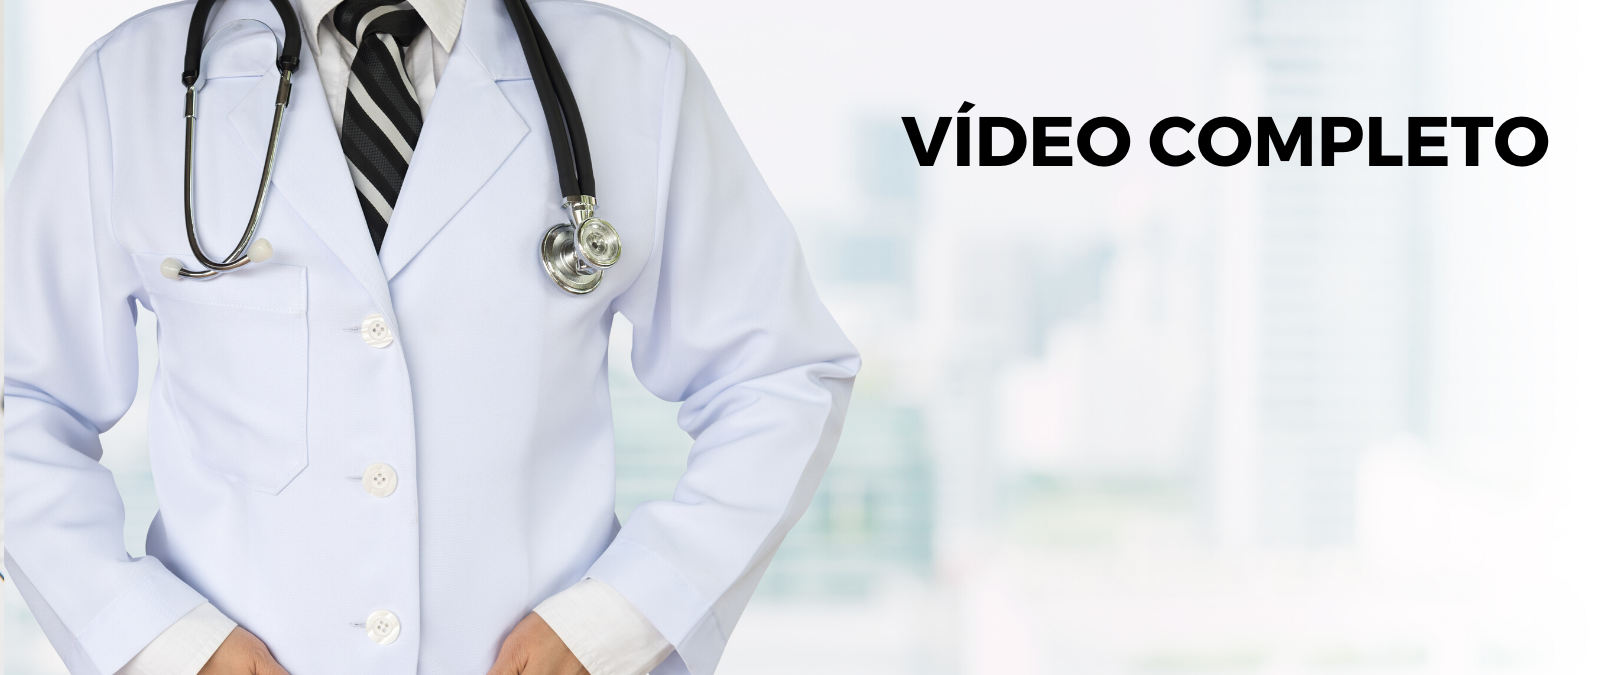 [Vídeo 19] As principais tendências da medicina do futuro!